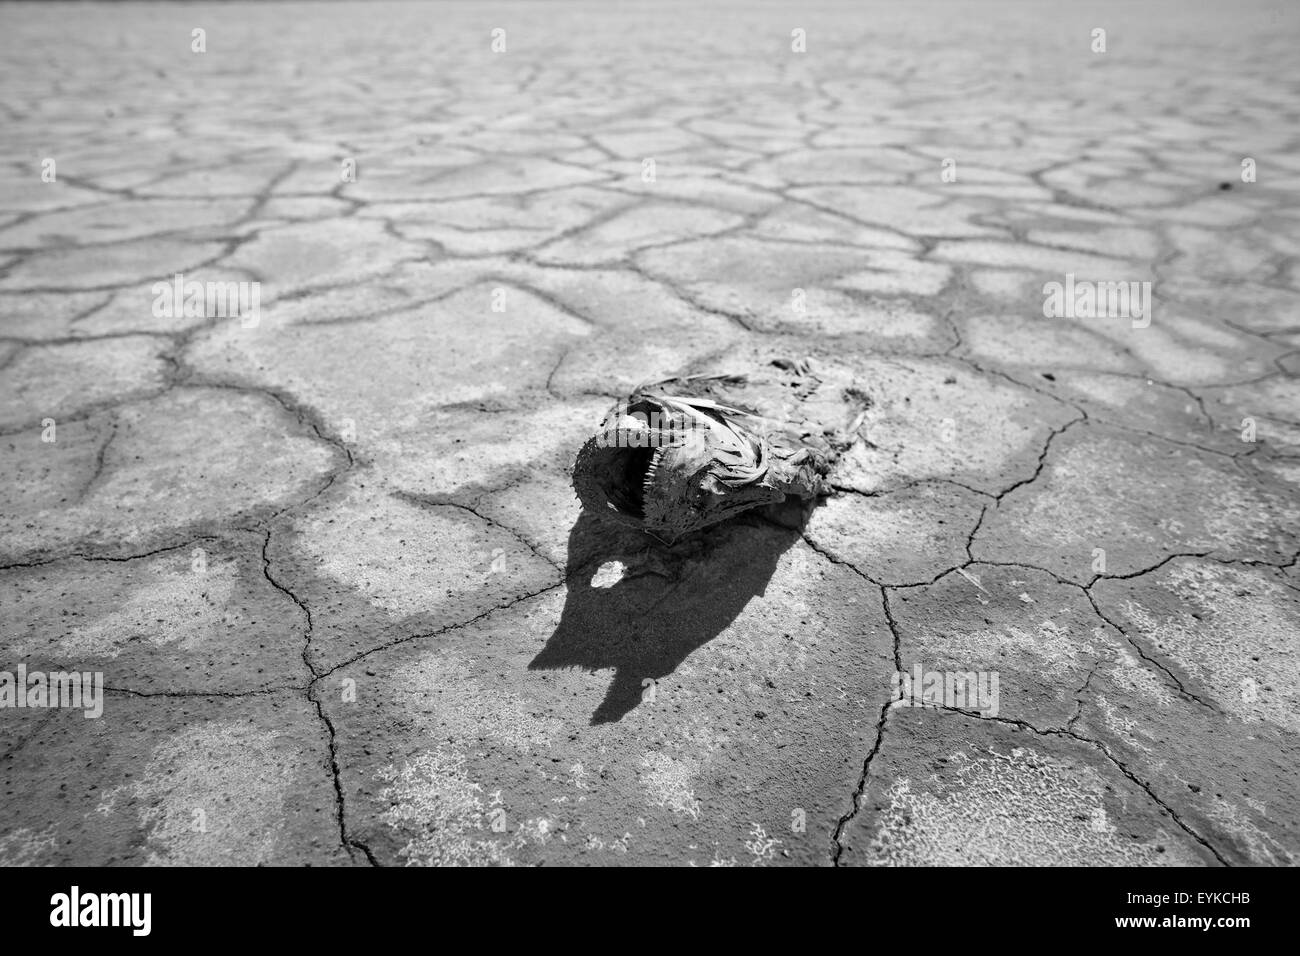 Black and white drought killed fish in California's Mojave Desert. Stock Photo